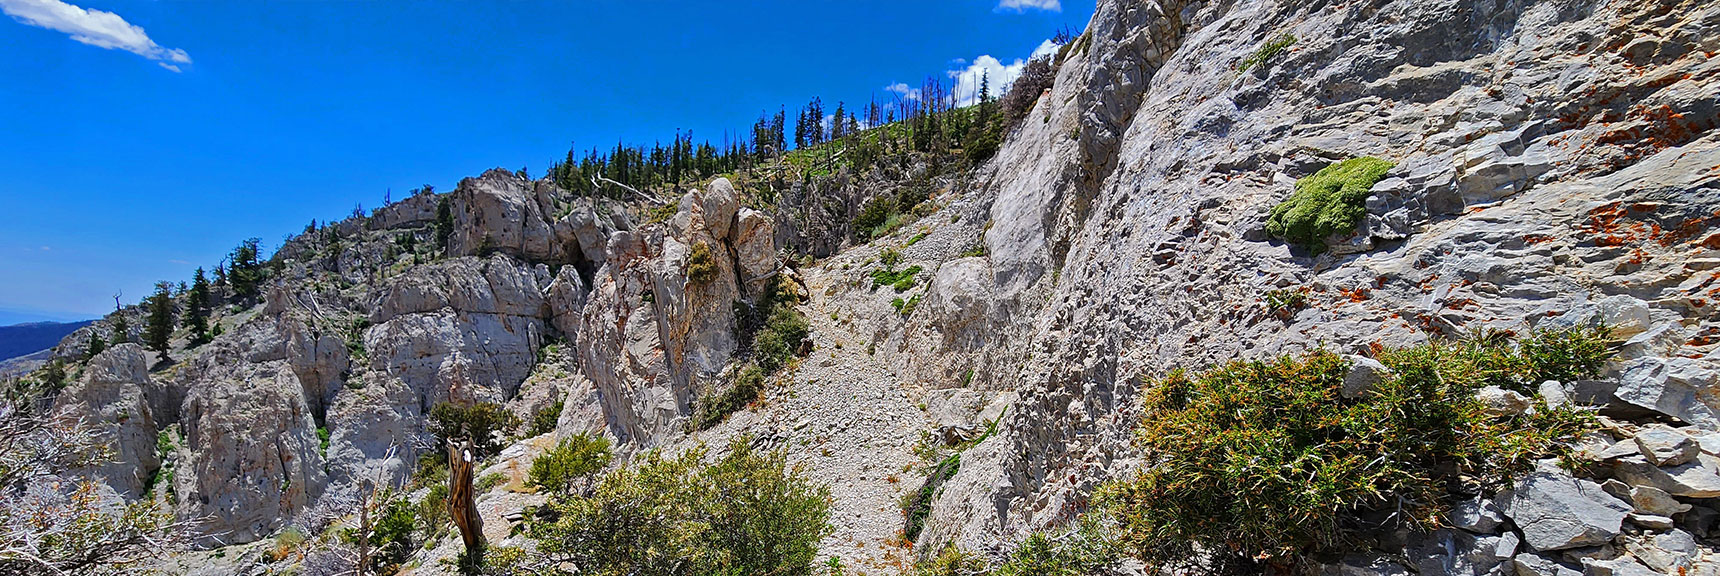 Approaching the More Gradual Terrain Above the Cliffs | Fletcher Canyon Trailhead to Harris Mountain Summit to Griffith Peak Summit Circuit Adventure | Mt. Charleston Wilderness, Nevada